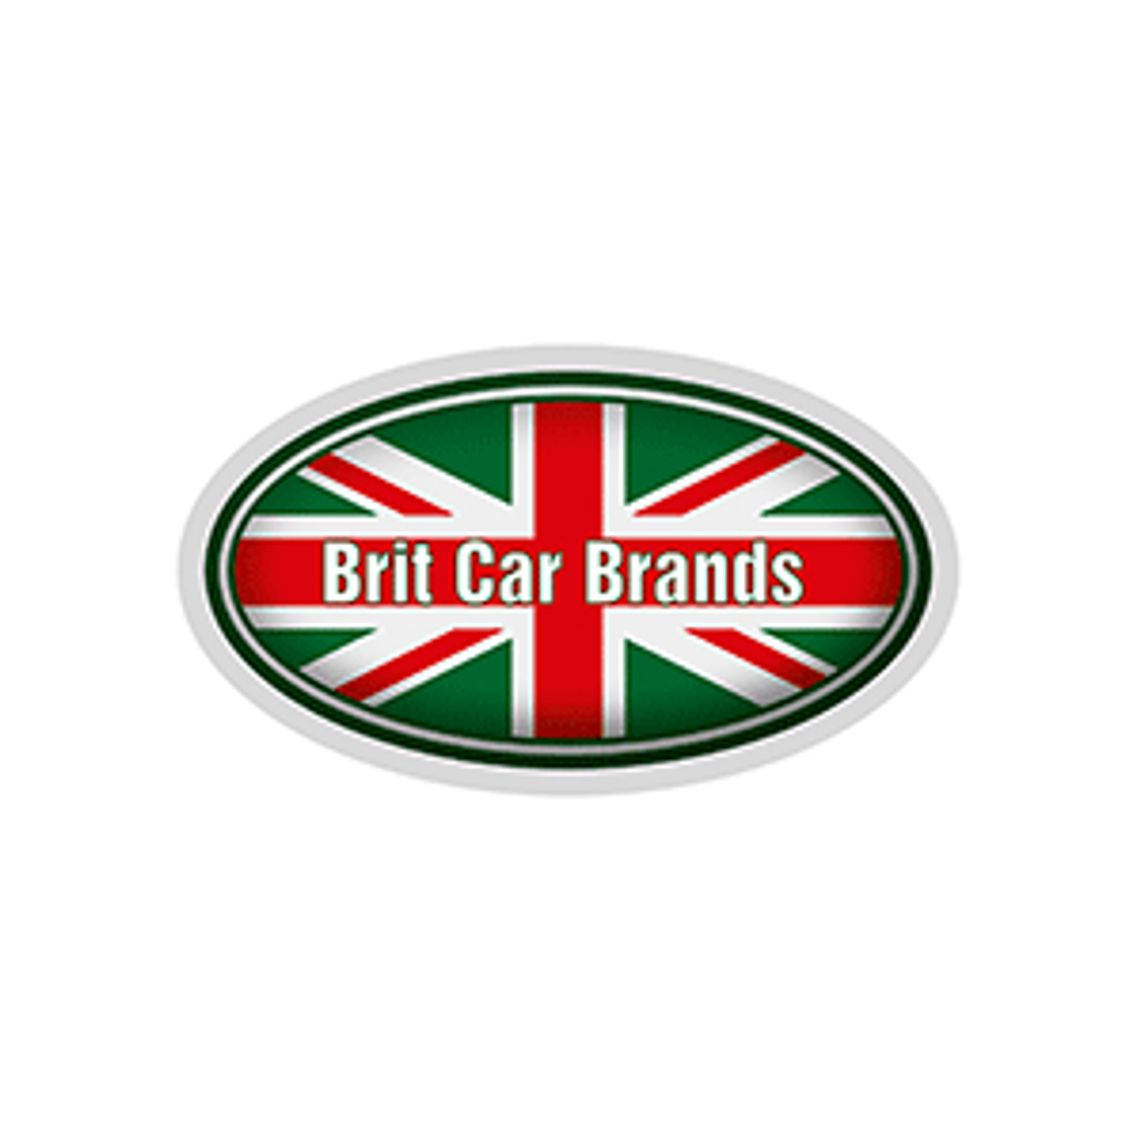 Historia marki Land Rover - BritCarBrands